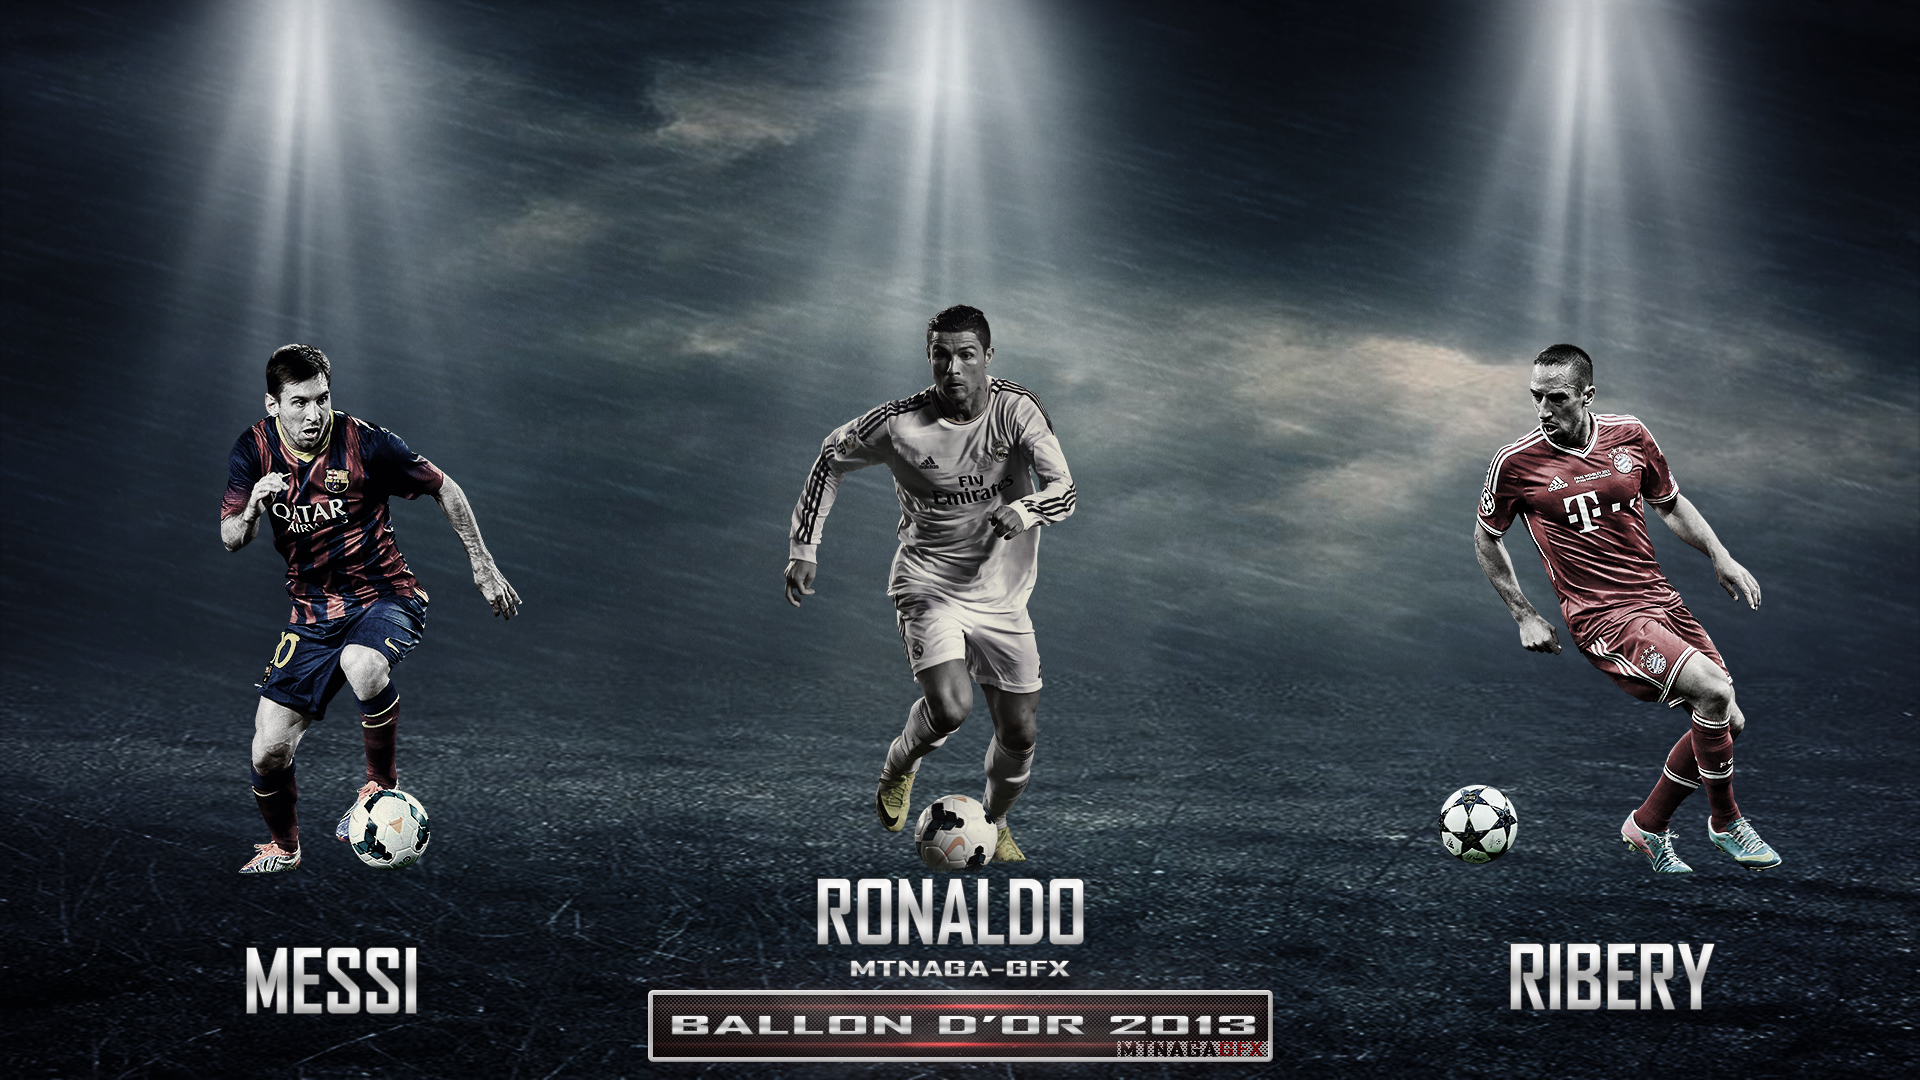 Messi Ronaldo Ribery Ballon D’or 2014 Wallpaper - 메시 호날두 배경 화면 - HD Wallpaper 